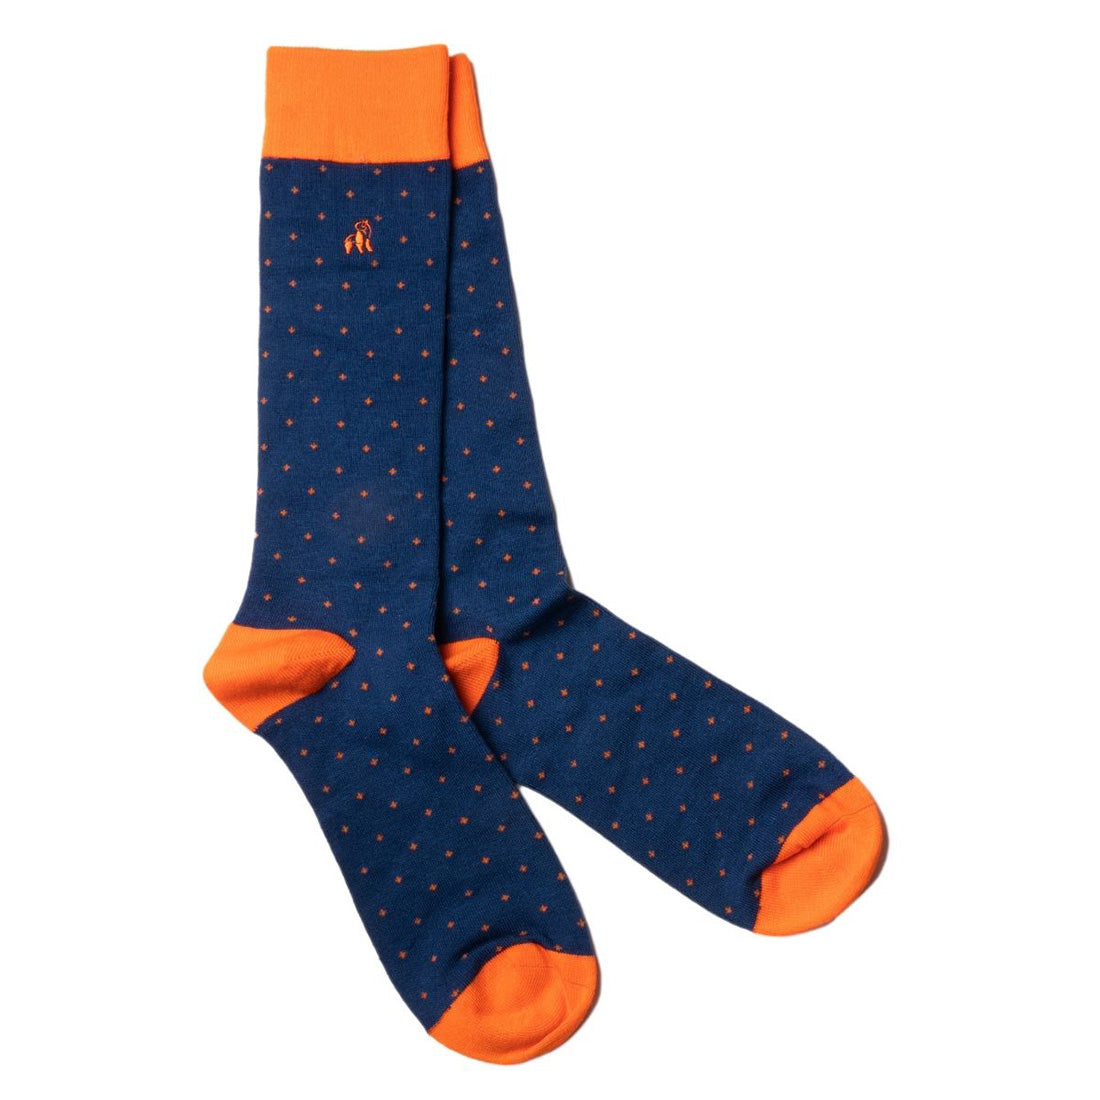 Spotted Orange Bamboo Socks (Comfort Cuff)